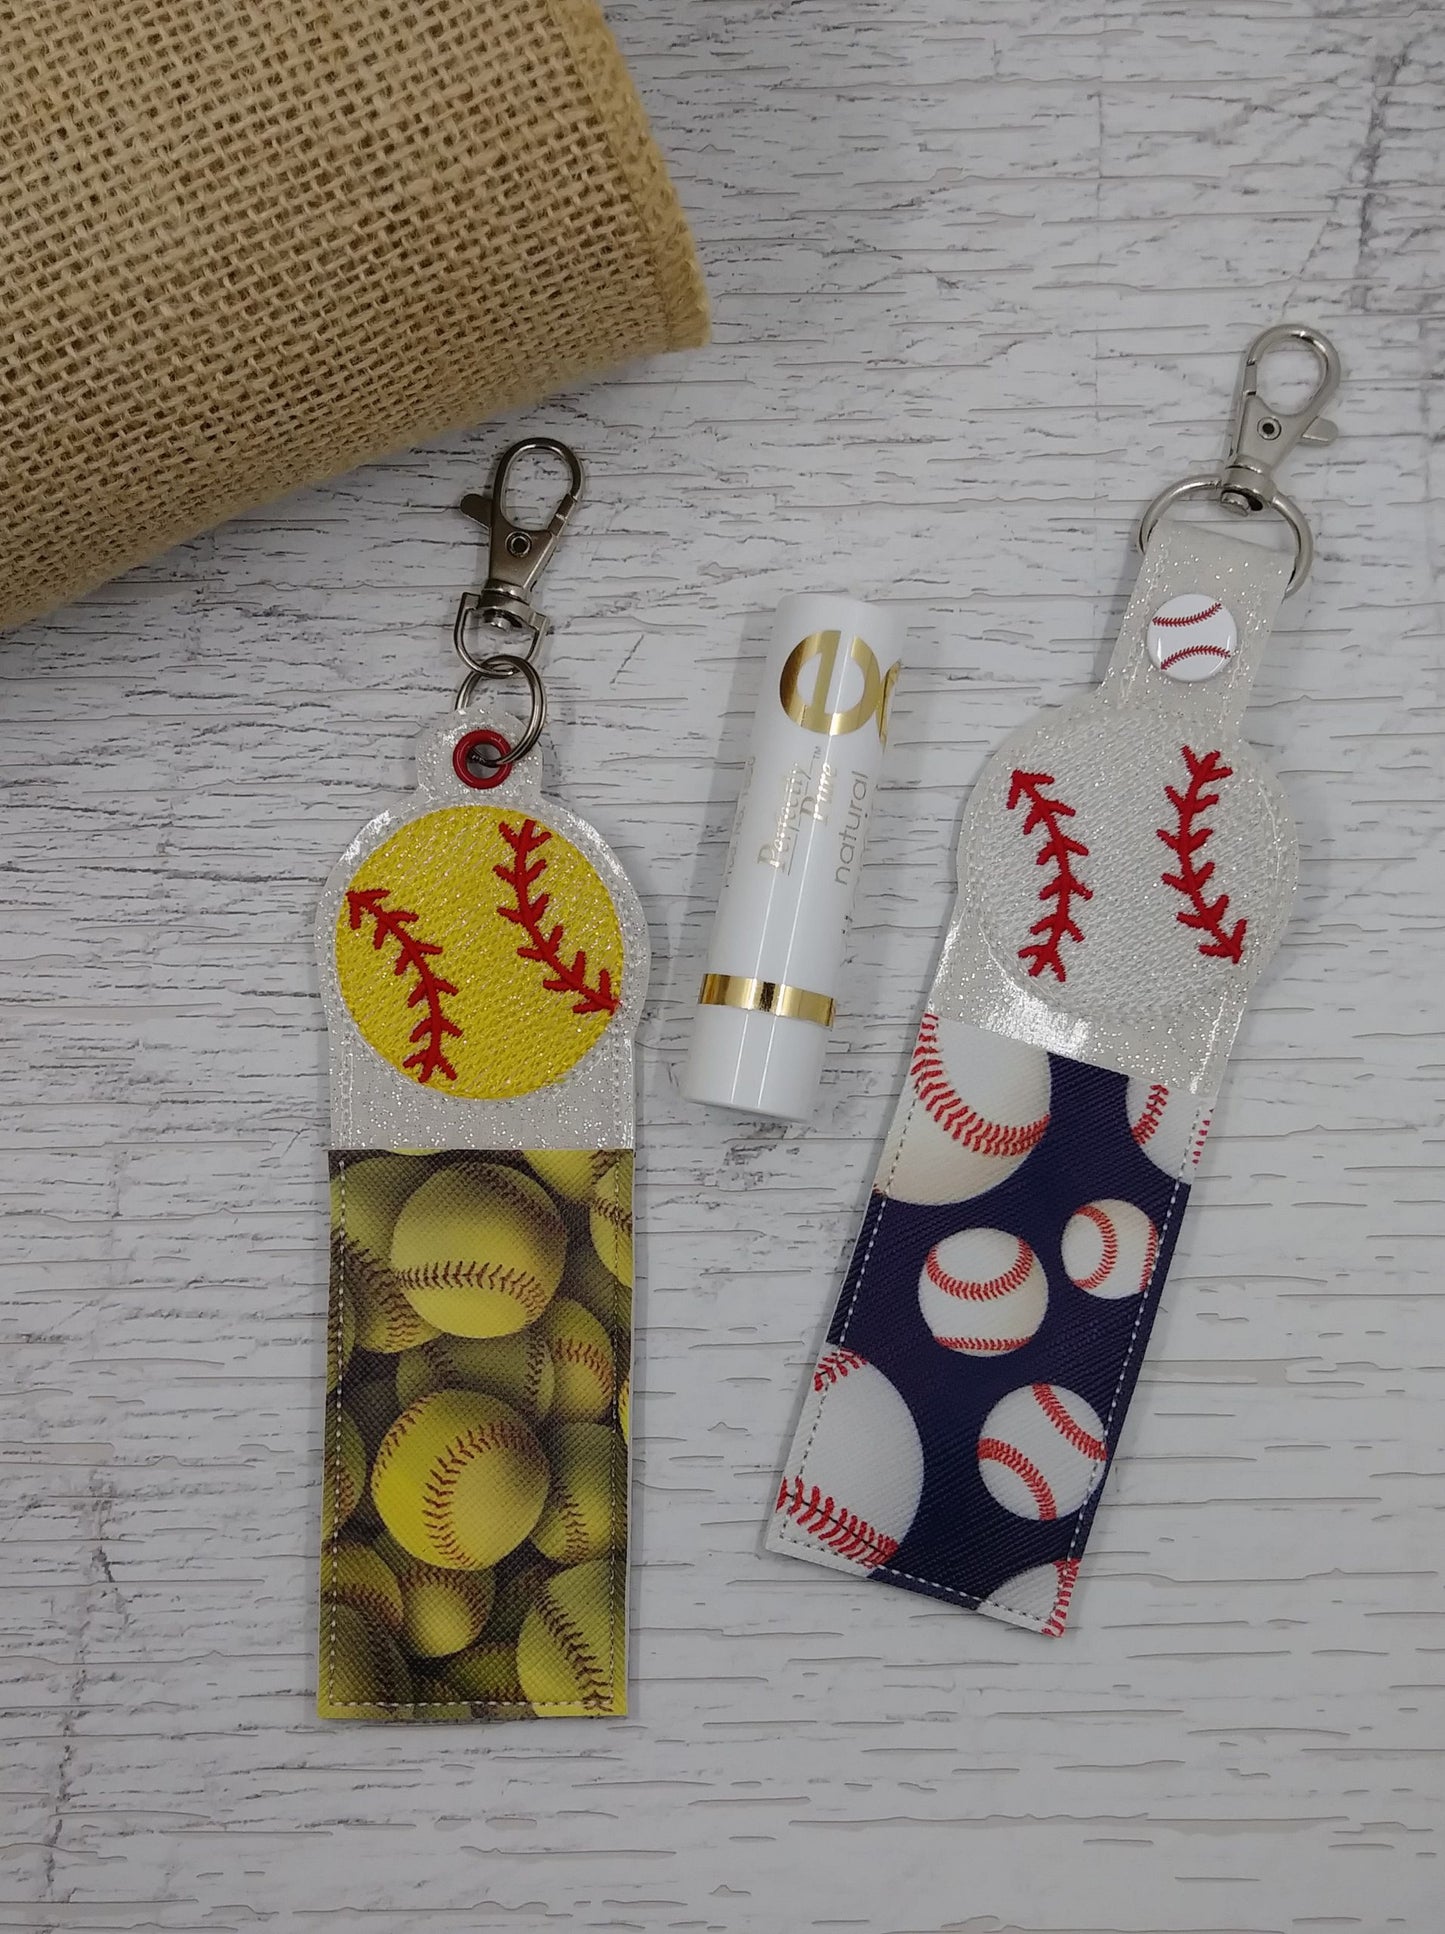 Baseball Lip Balm Holders 5x7 - DIGITAL Embroidery DESIGN